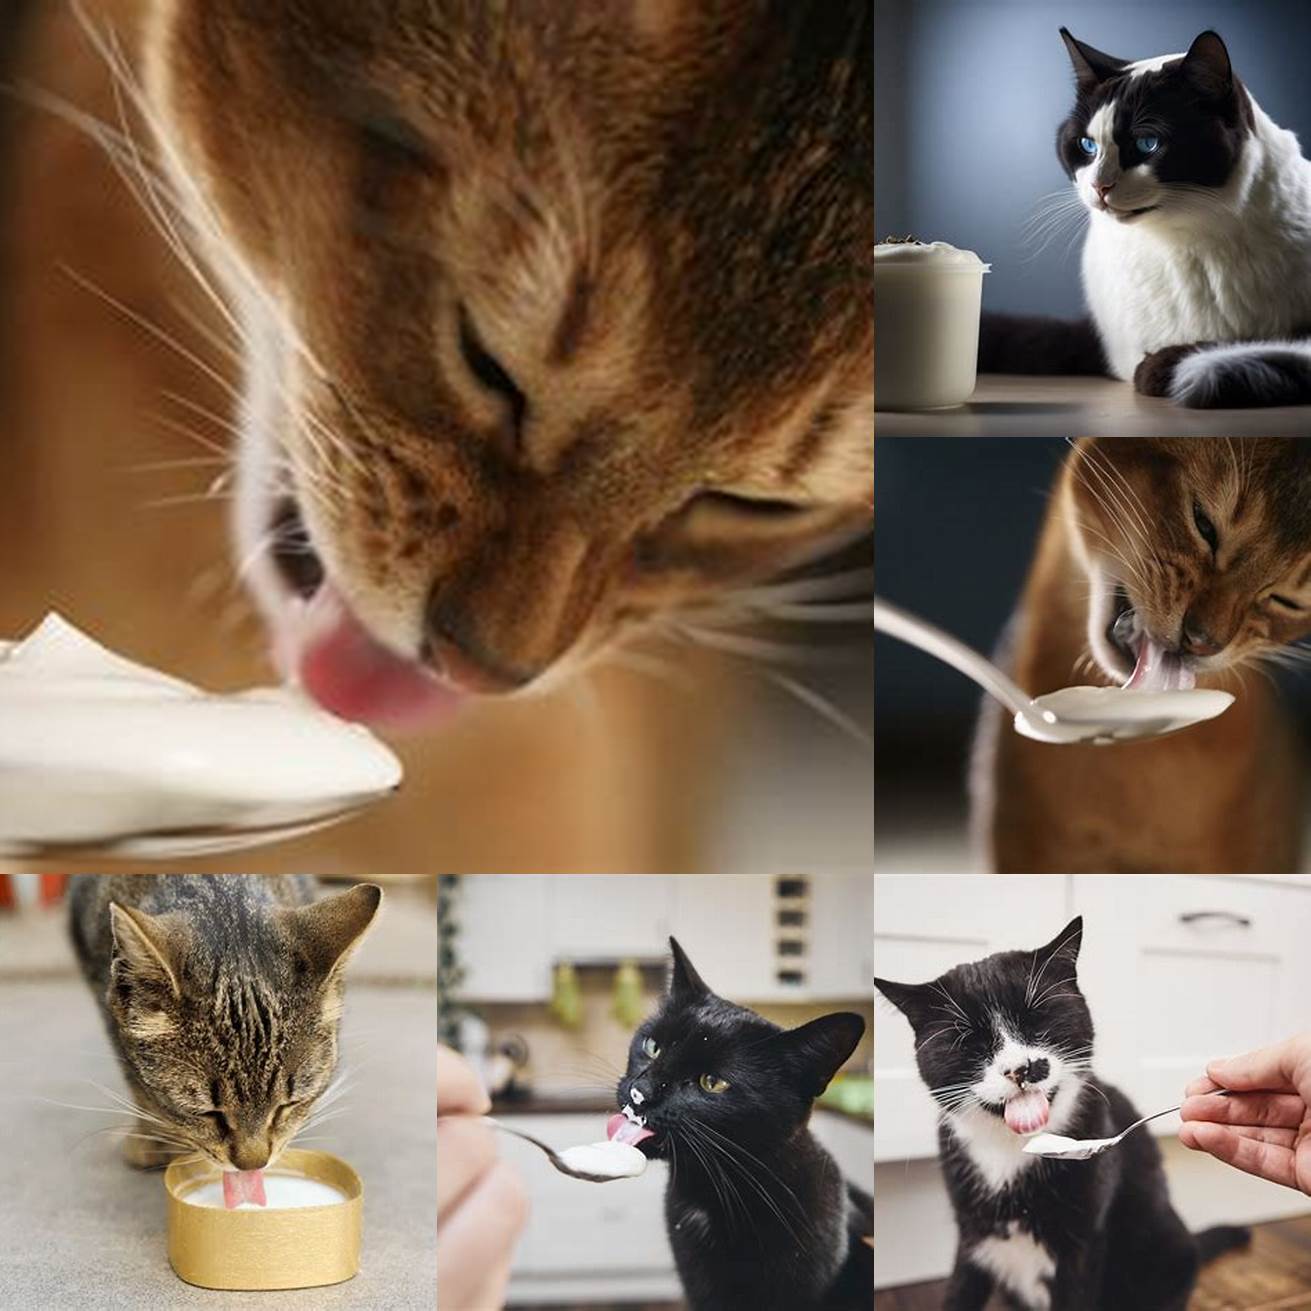 1 Image of a cat eating yogurt